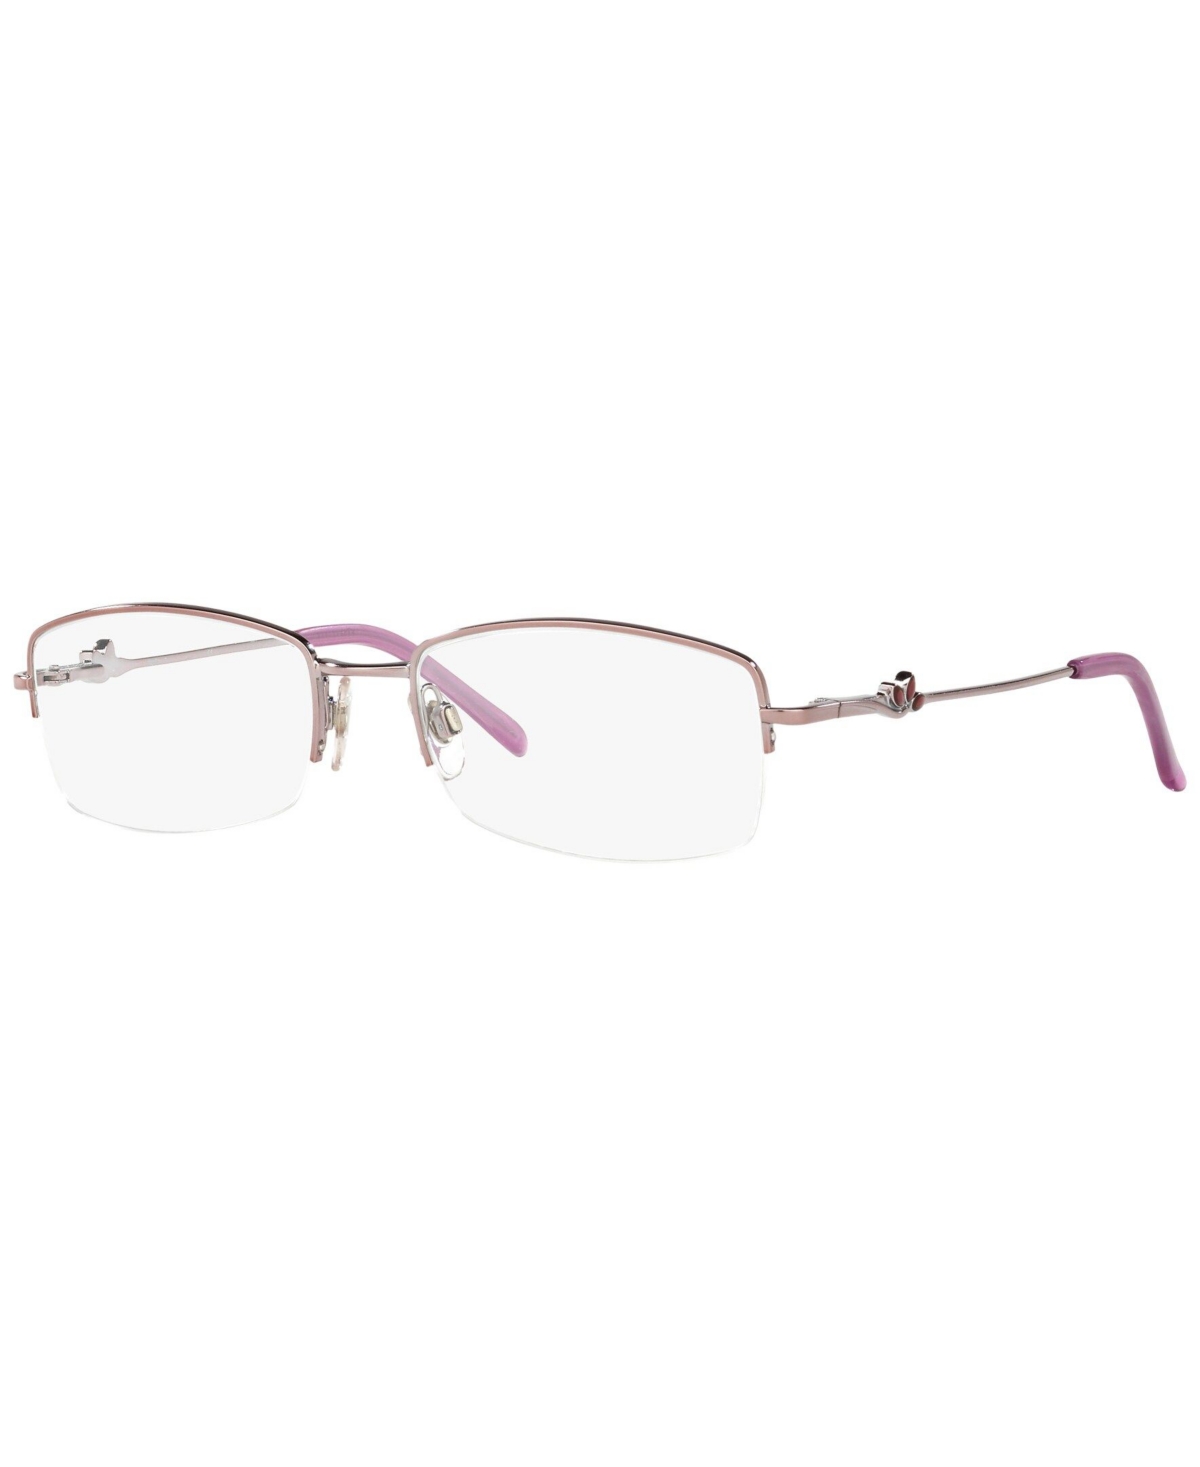 SF2553 Women's Square Eyeglasses - Silver